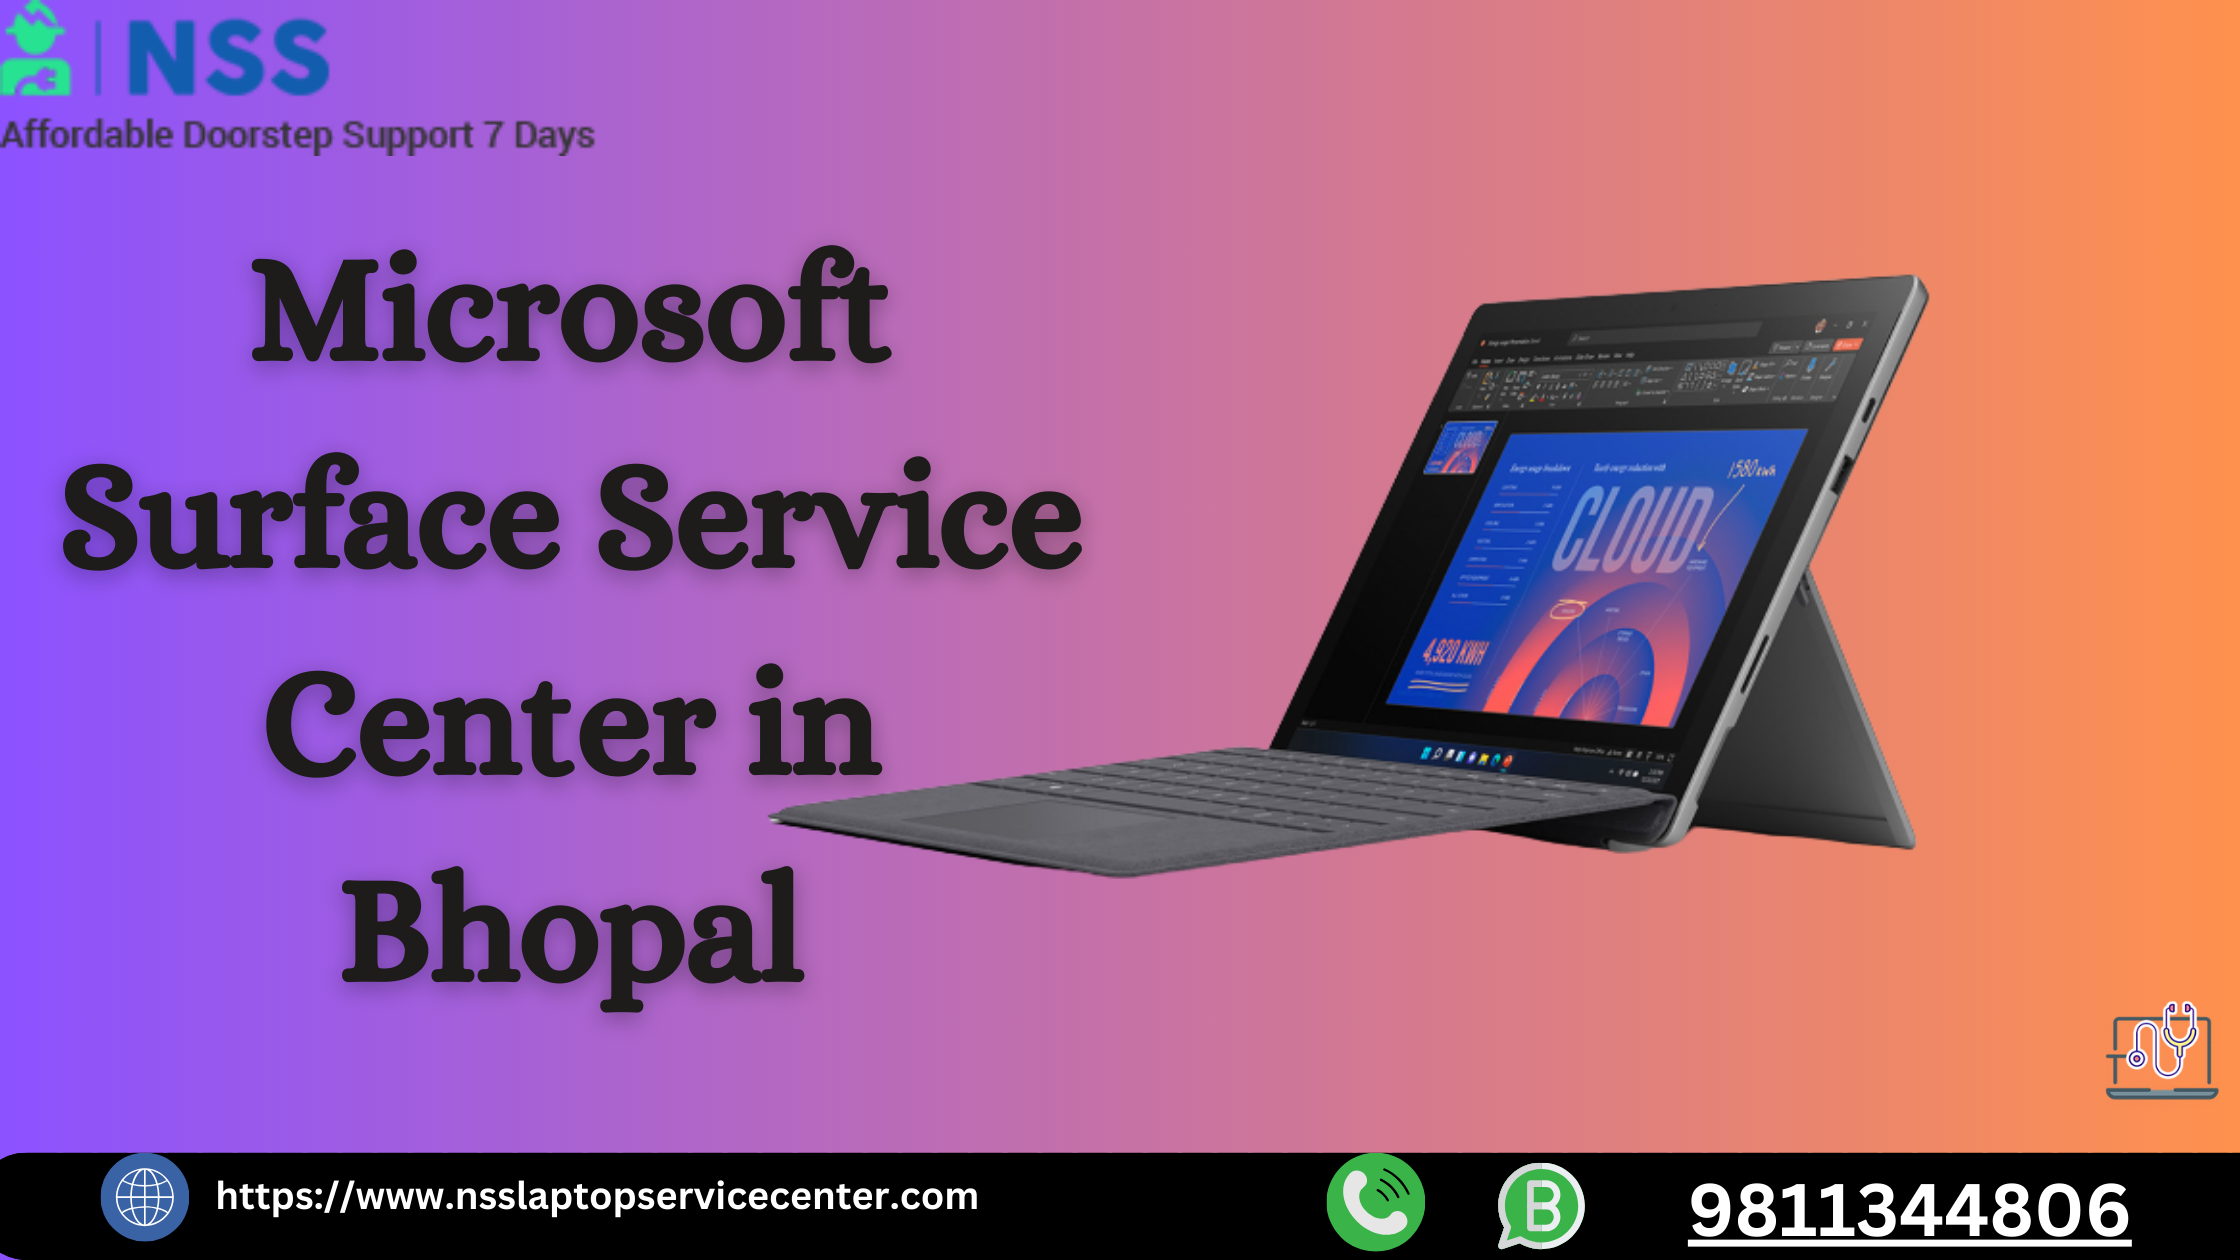 Microsoft Surface Service Center Near Me in Bhopal